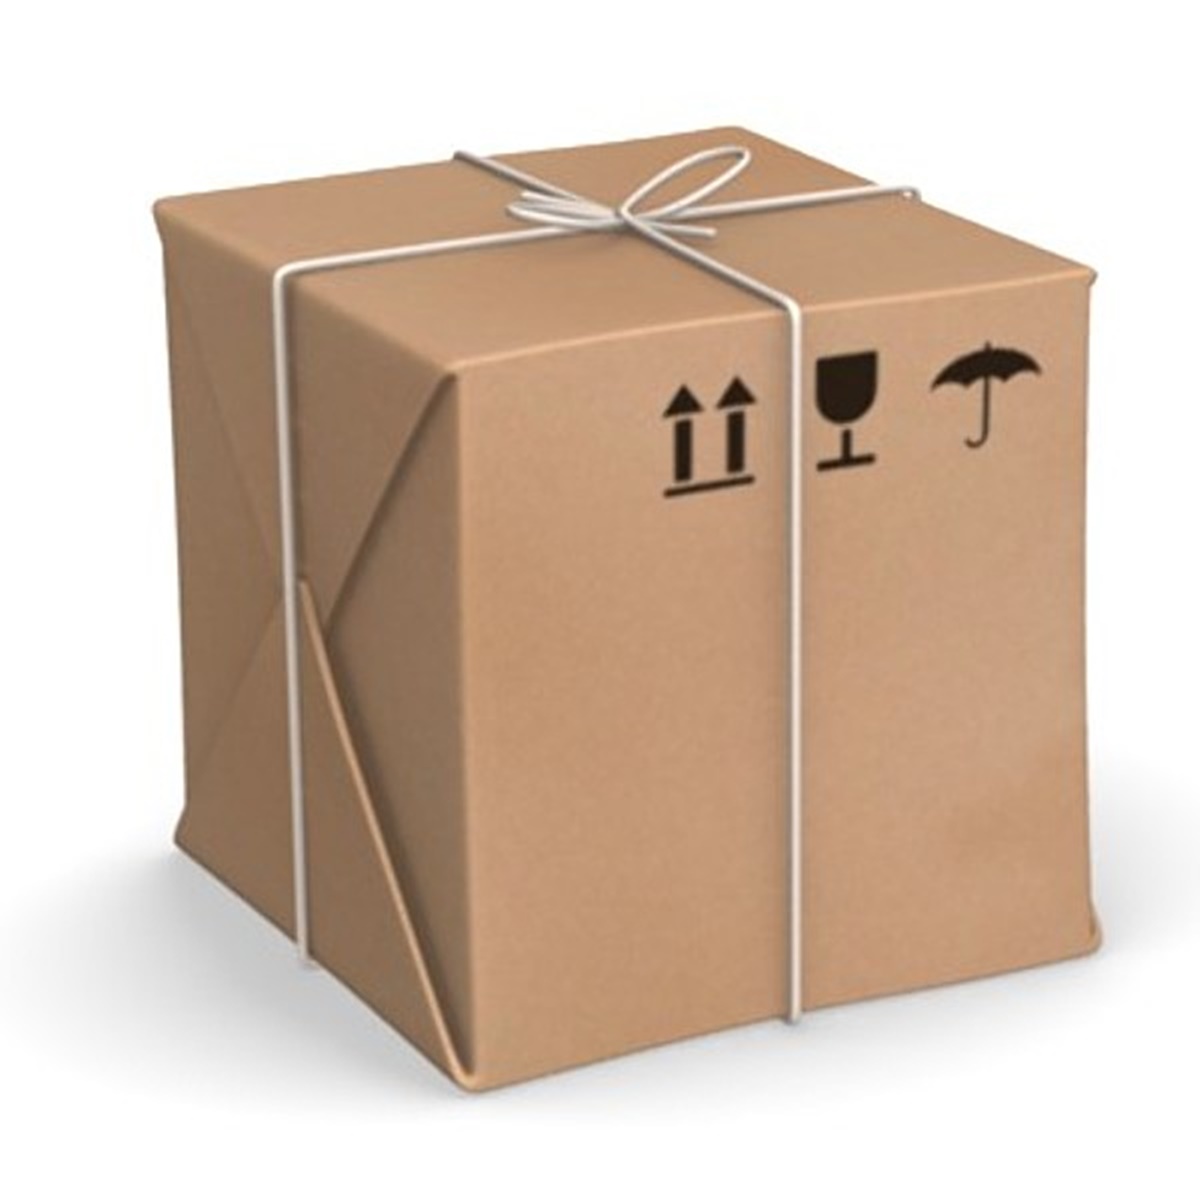 Package errno. Упаковка товара. Коробка с товаром. Коробки для посылок. Значок коробки.